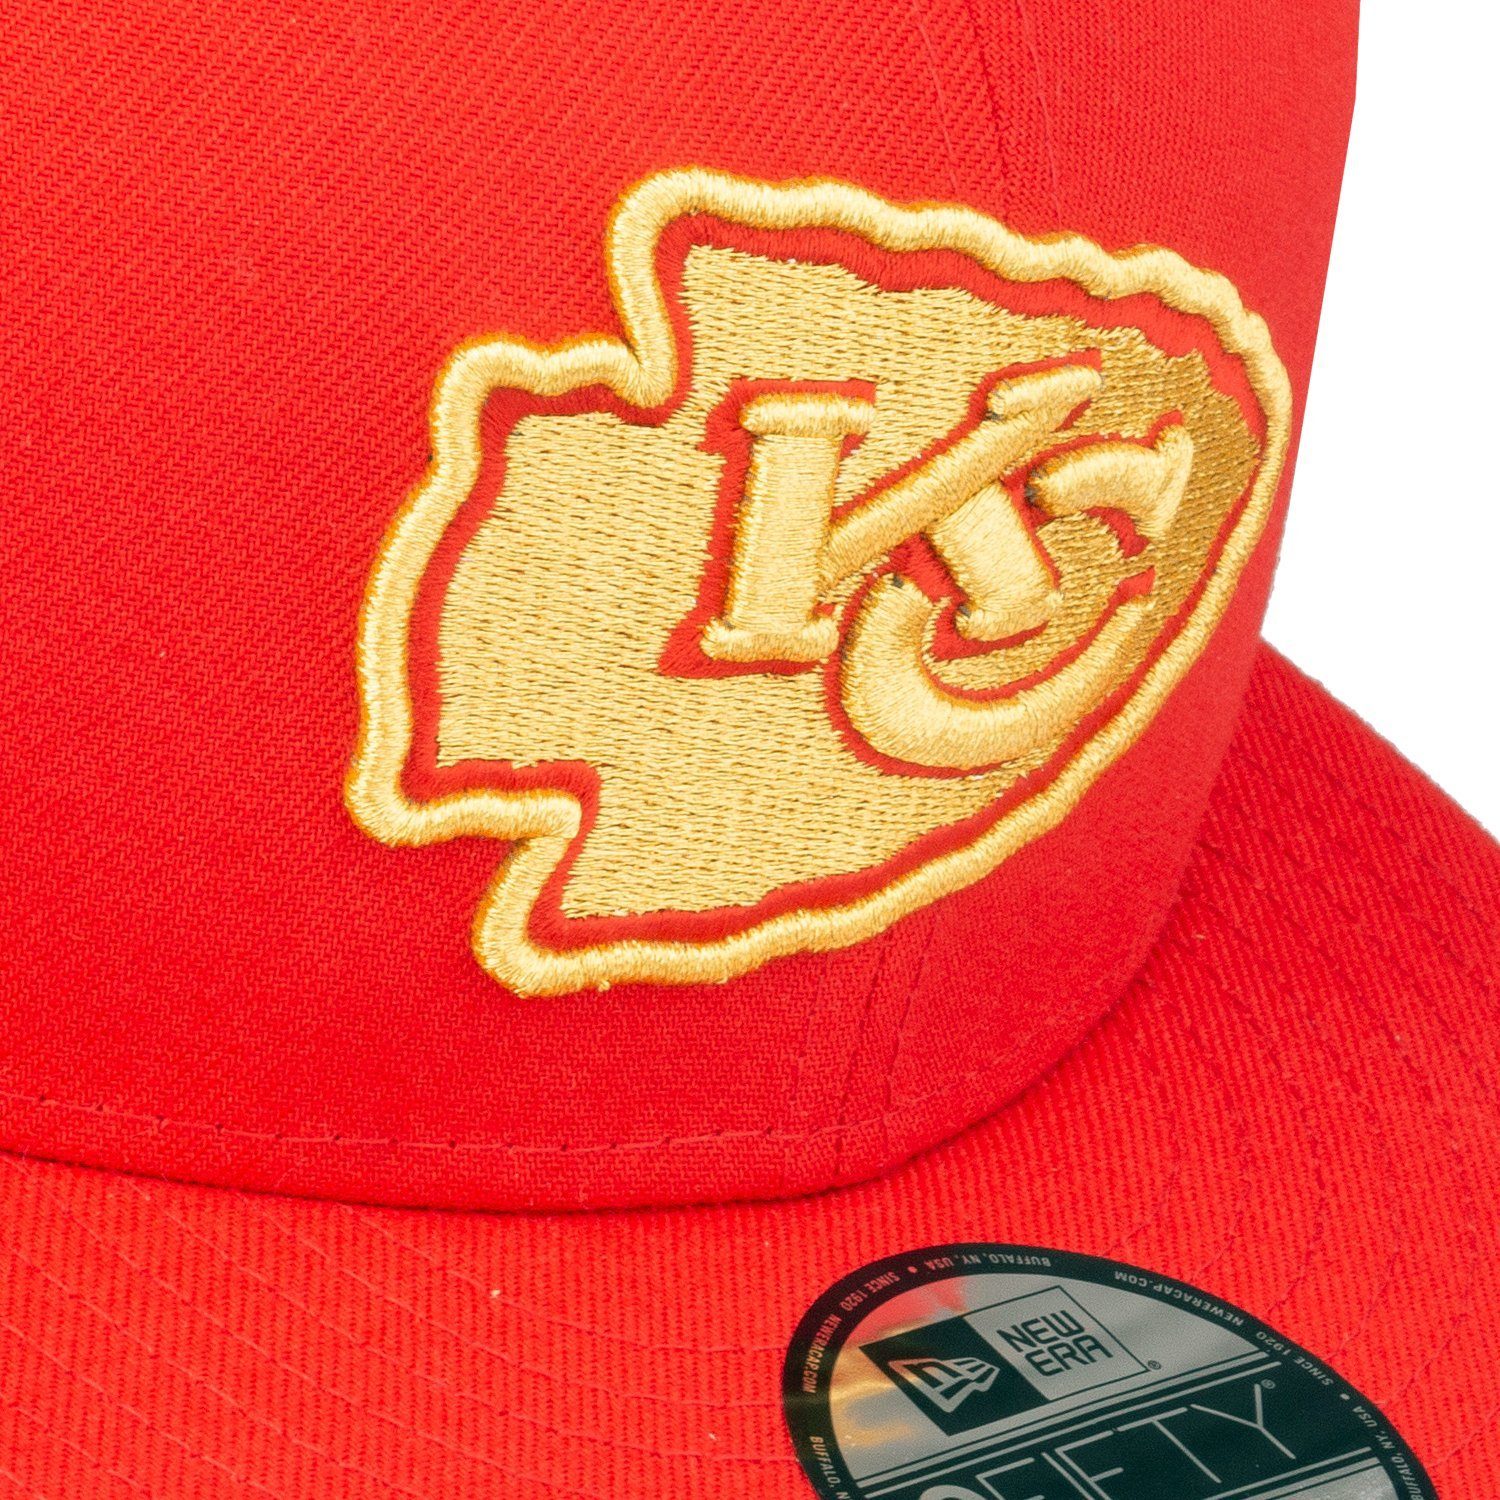 Snapback 9Fifty Kansas gold Era Chiefs Cap City red New